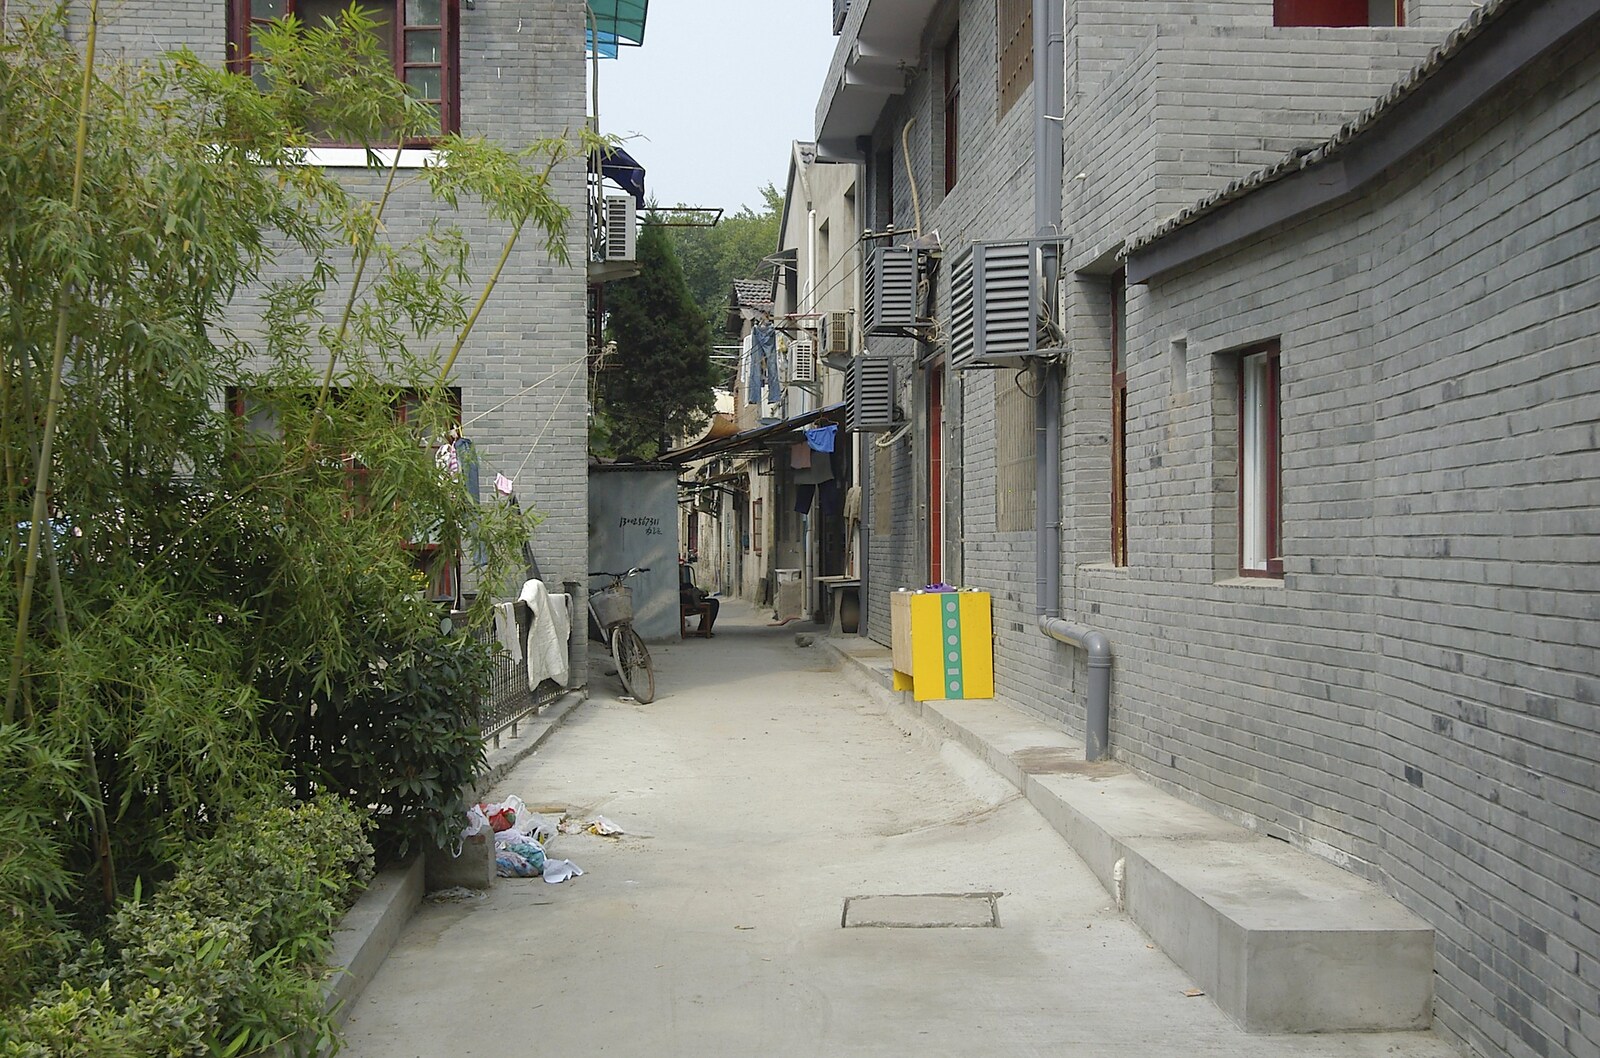 A suburban back street from A Few Days in Nanjing, Jiangsu Province, China - 7th October 2006